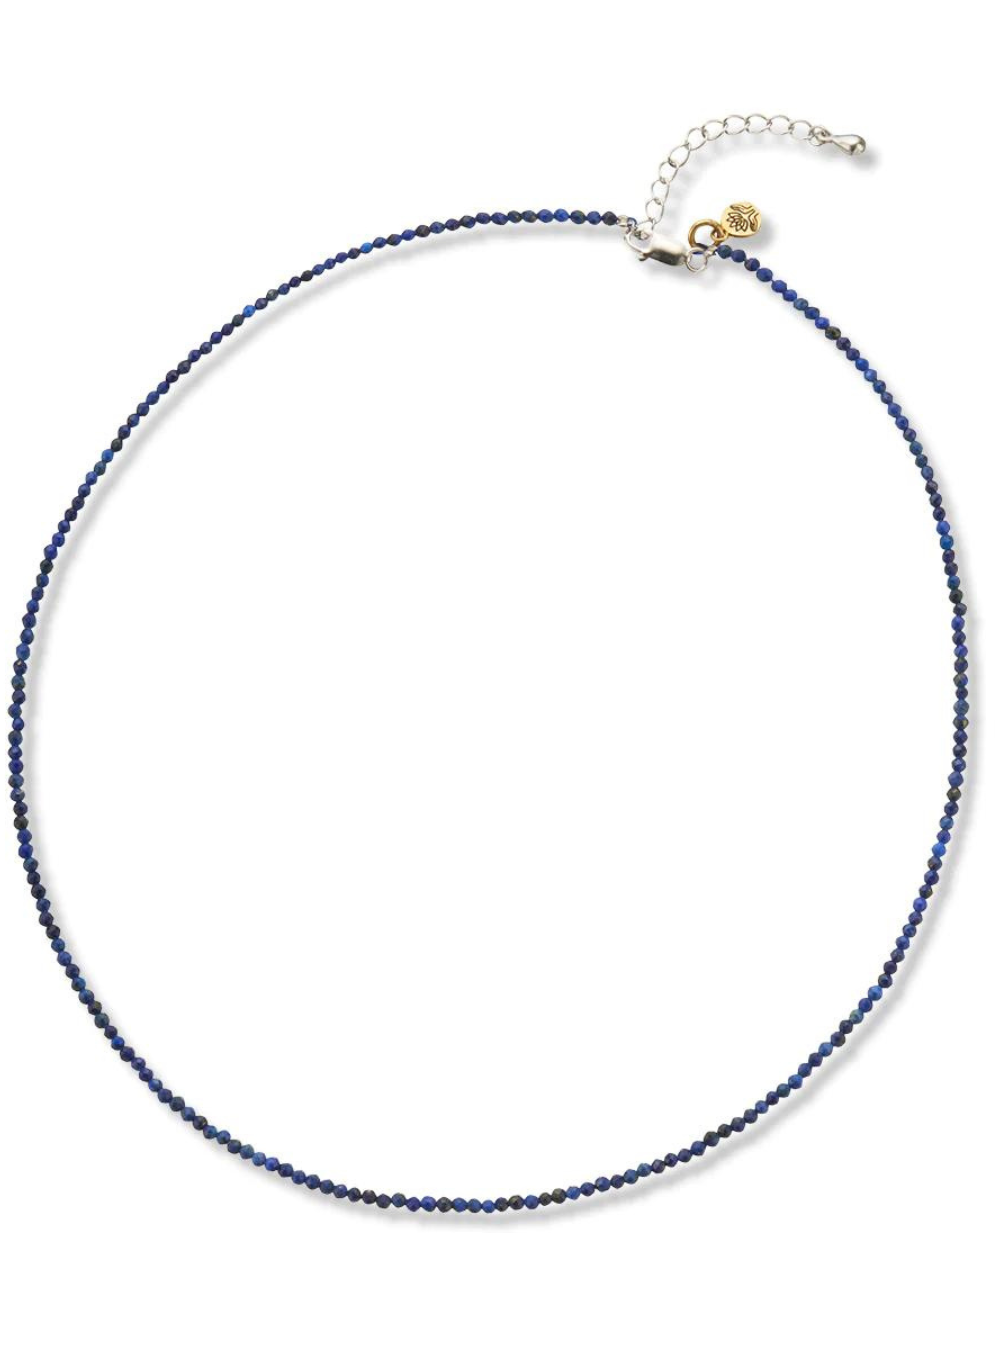 Lapis Lazuli Empower Gem Necklace